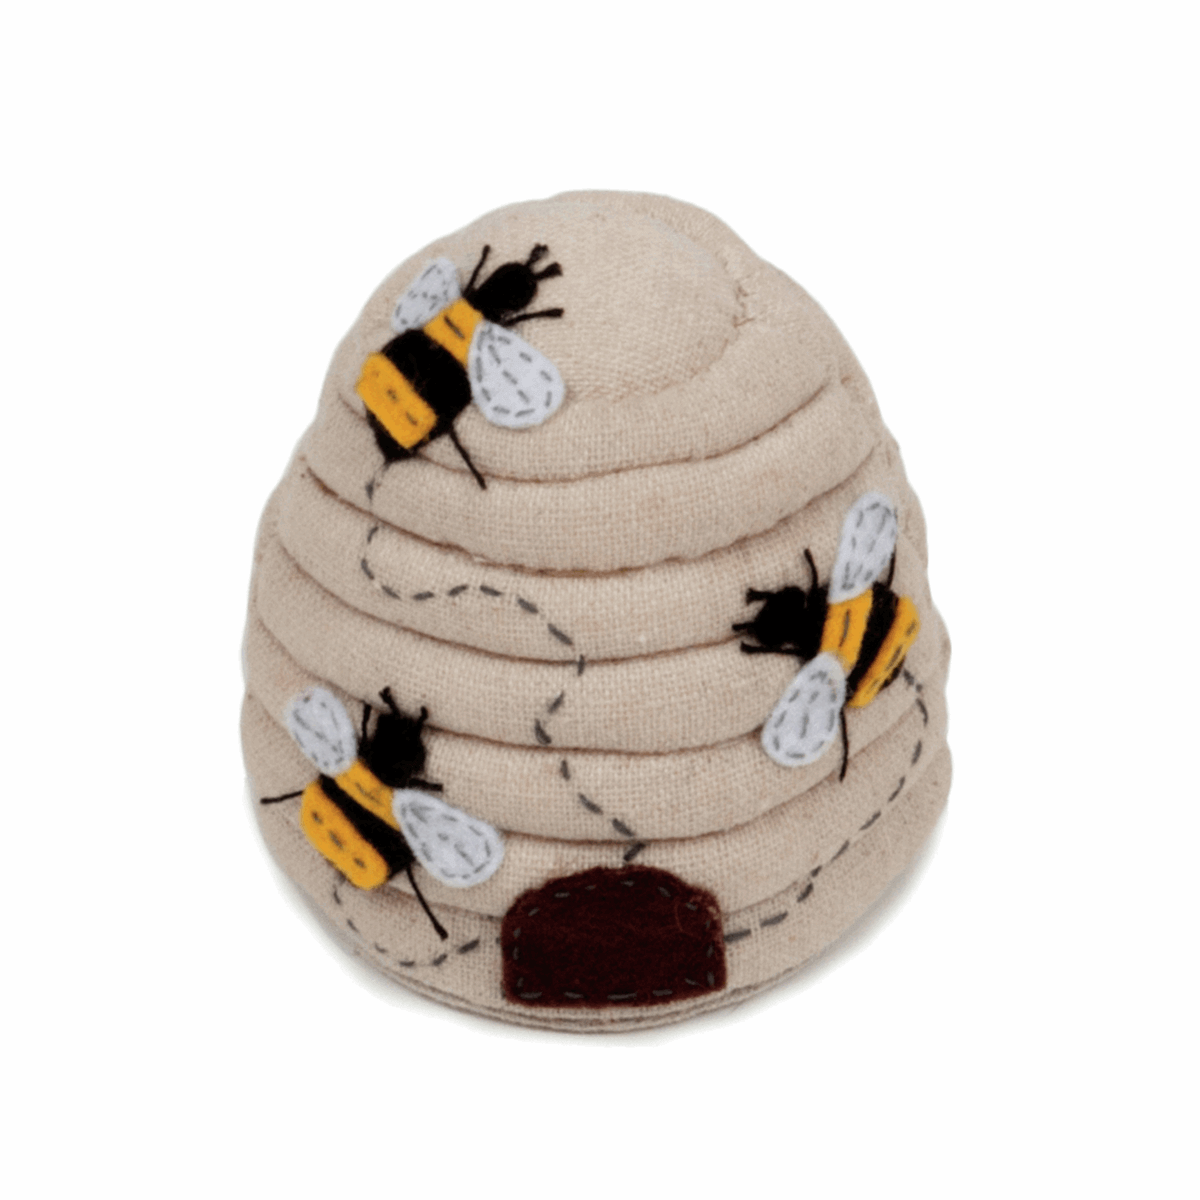 Honeybee bee hive Handmade pin cushion. Great sewing pincushion gift.